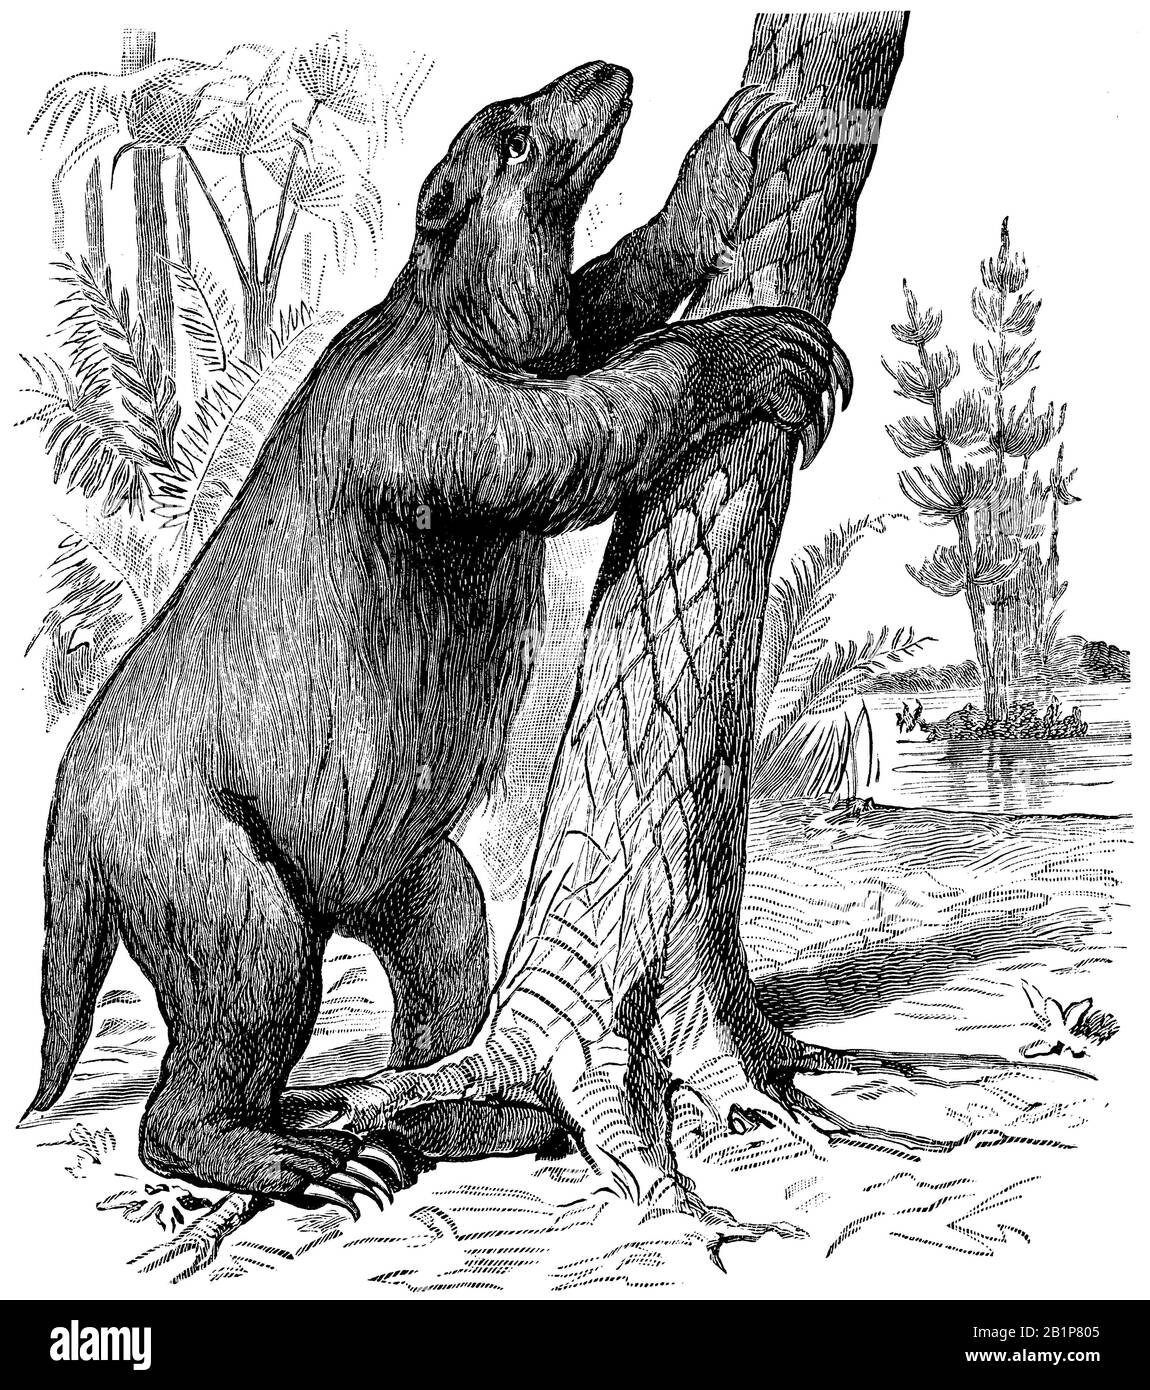 giant sloth, Mylodon robustus, anonym (evolution history book, 1890) Stock Photo